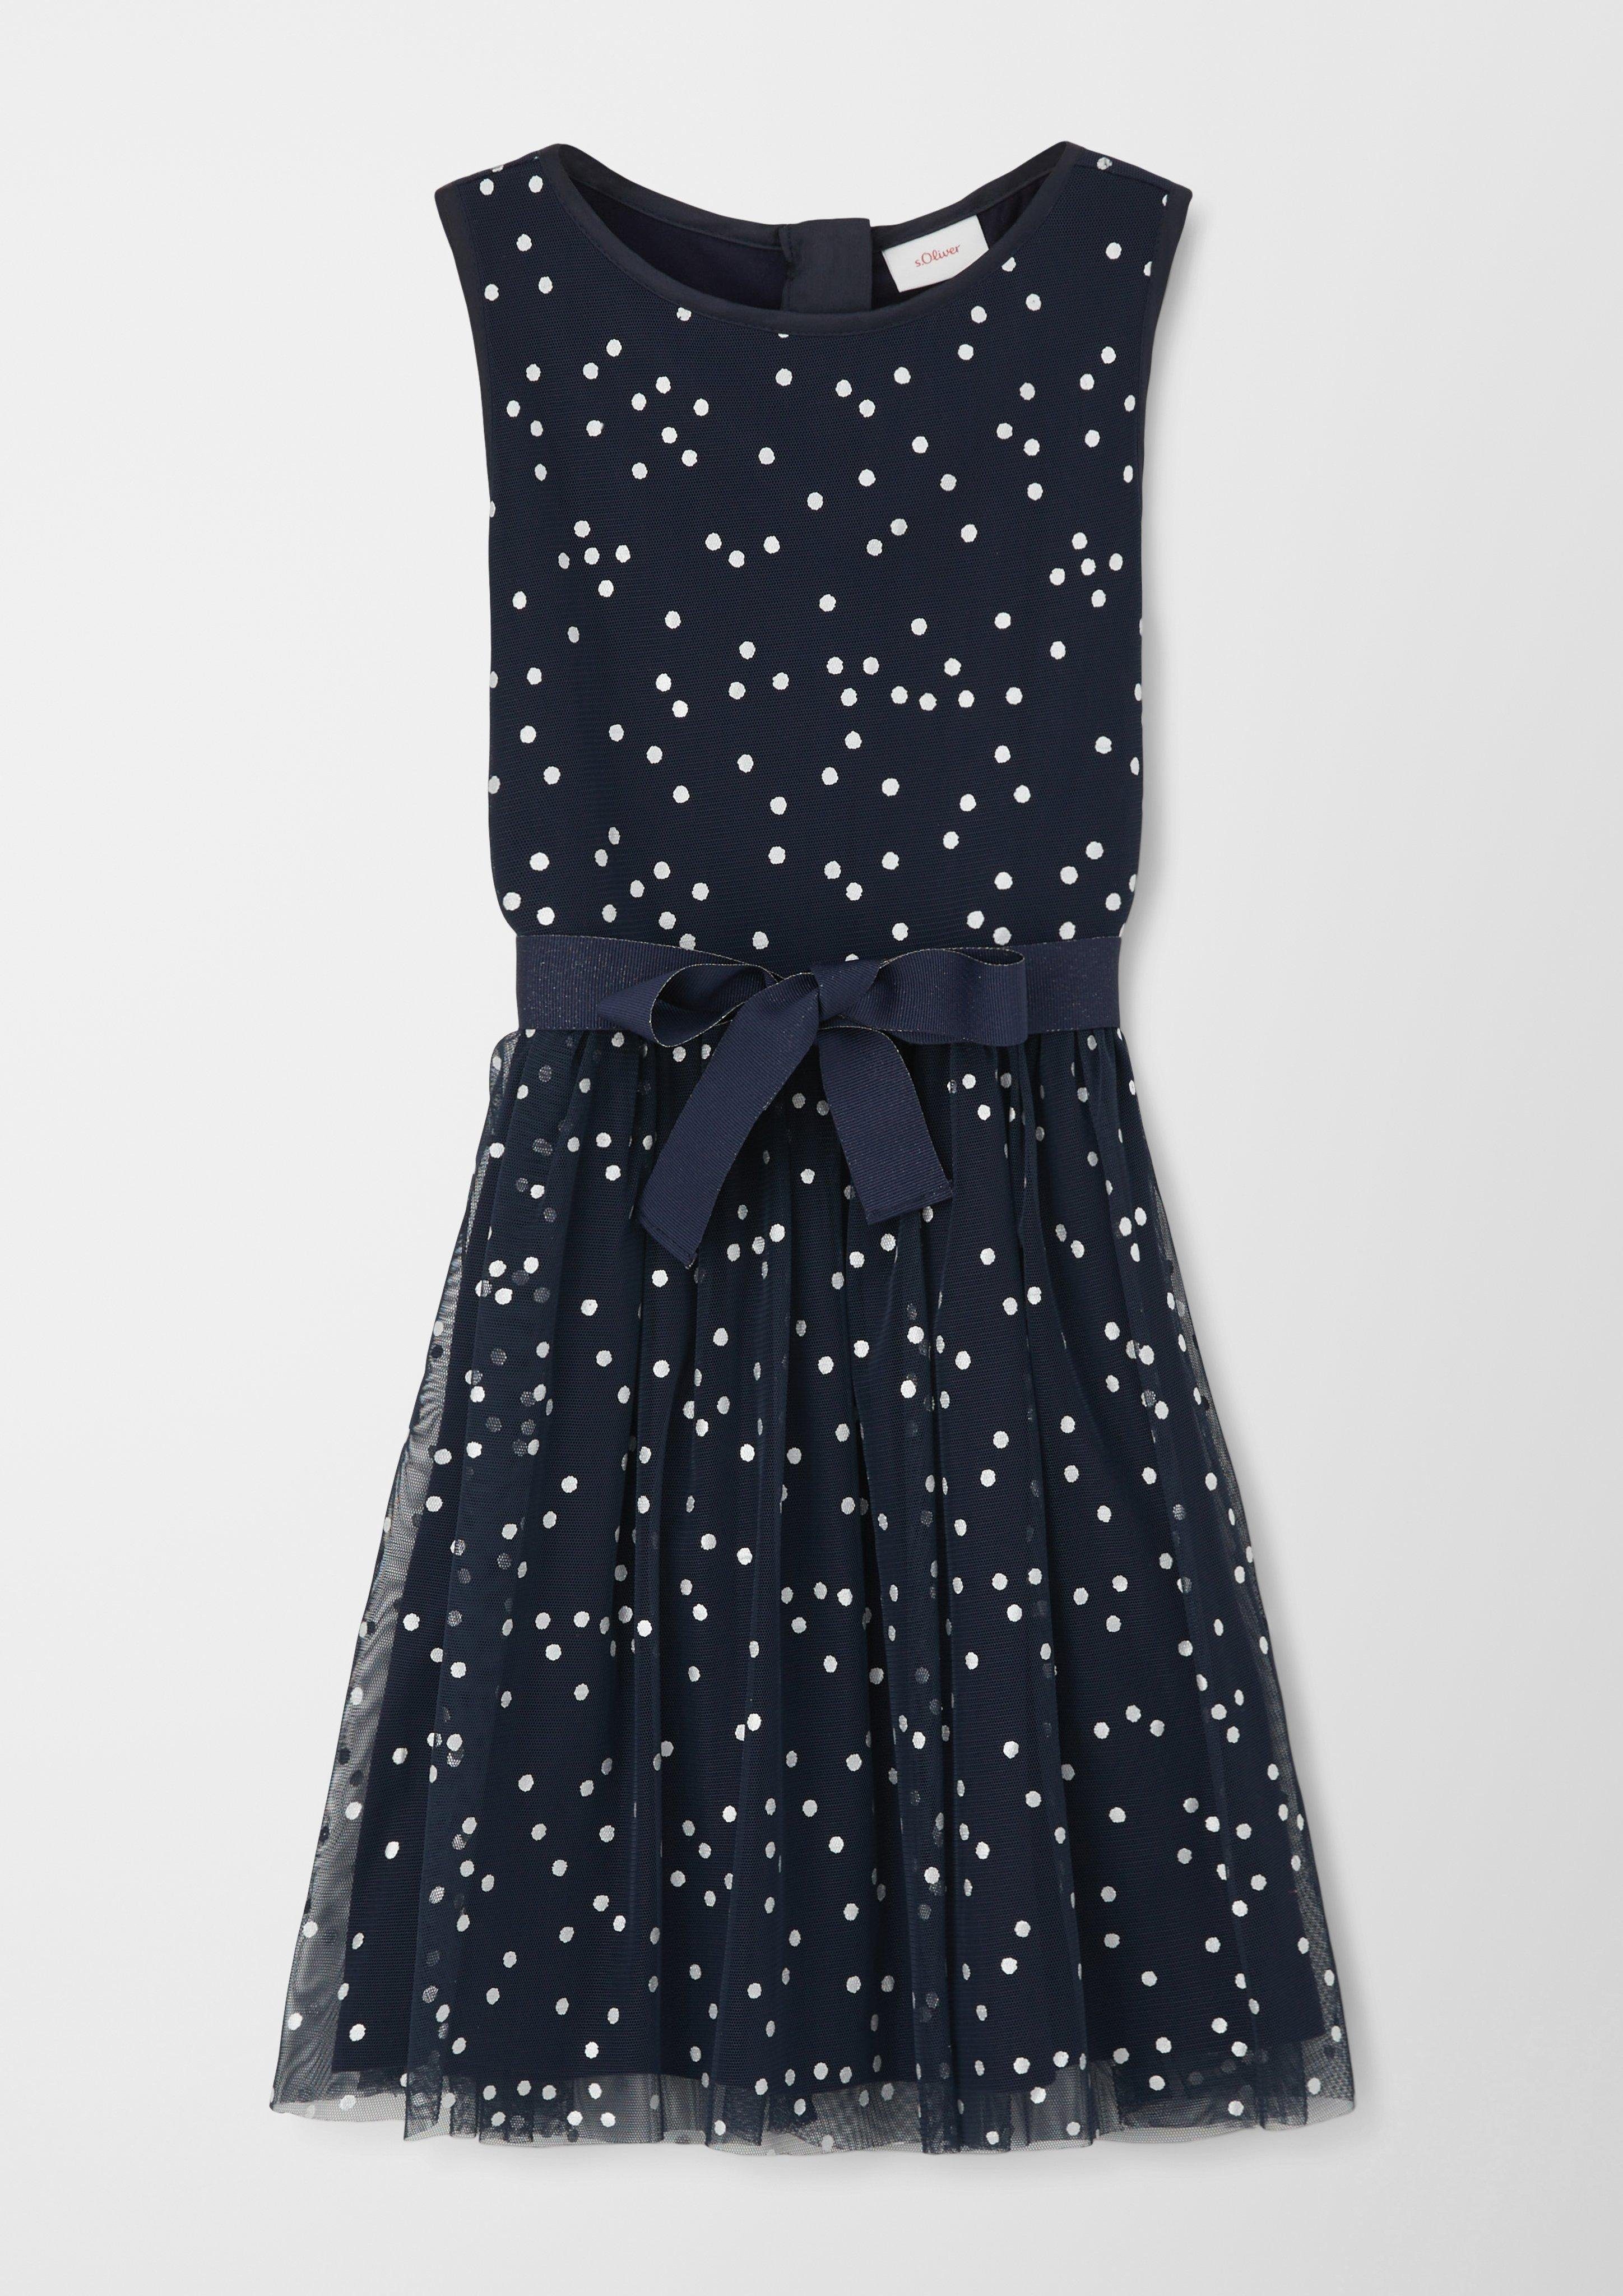 s.Oliver BLACK LABEL s.Oliver Minikleid Kleid mit Bindegürtel navy | Sommerkleider